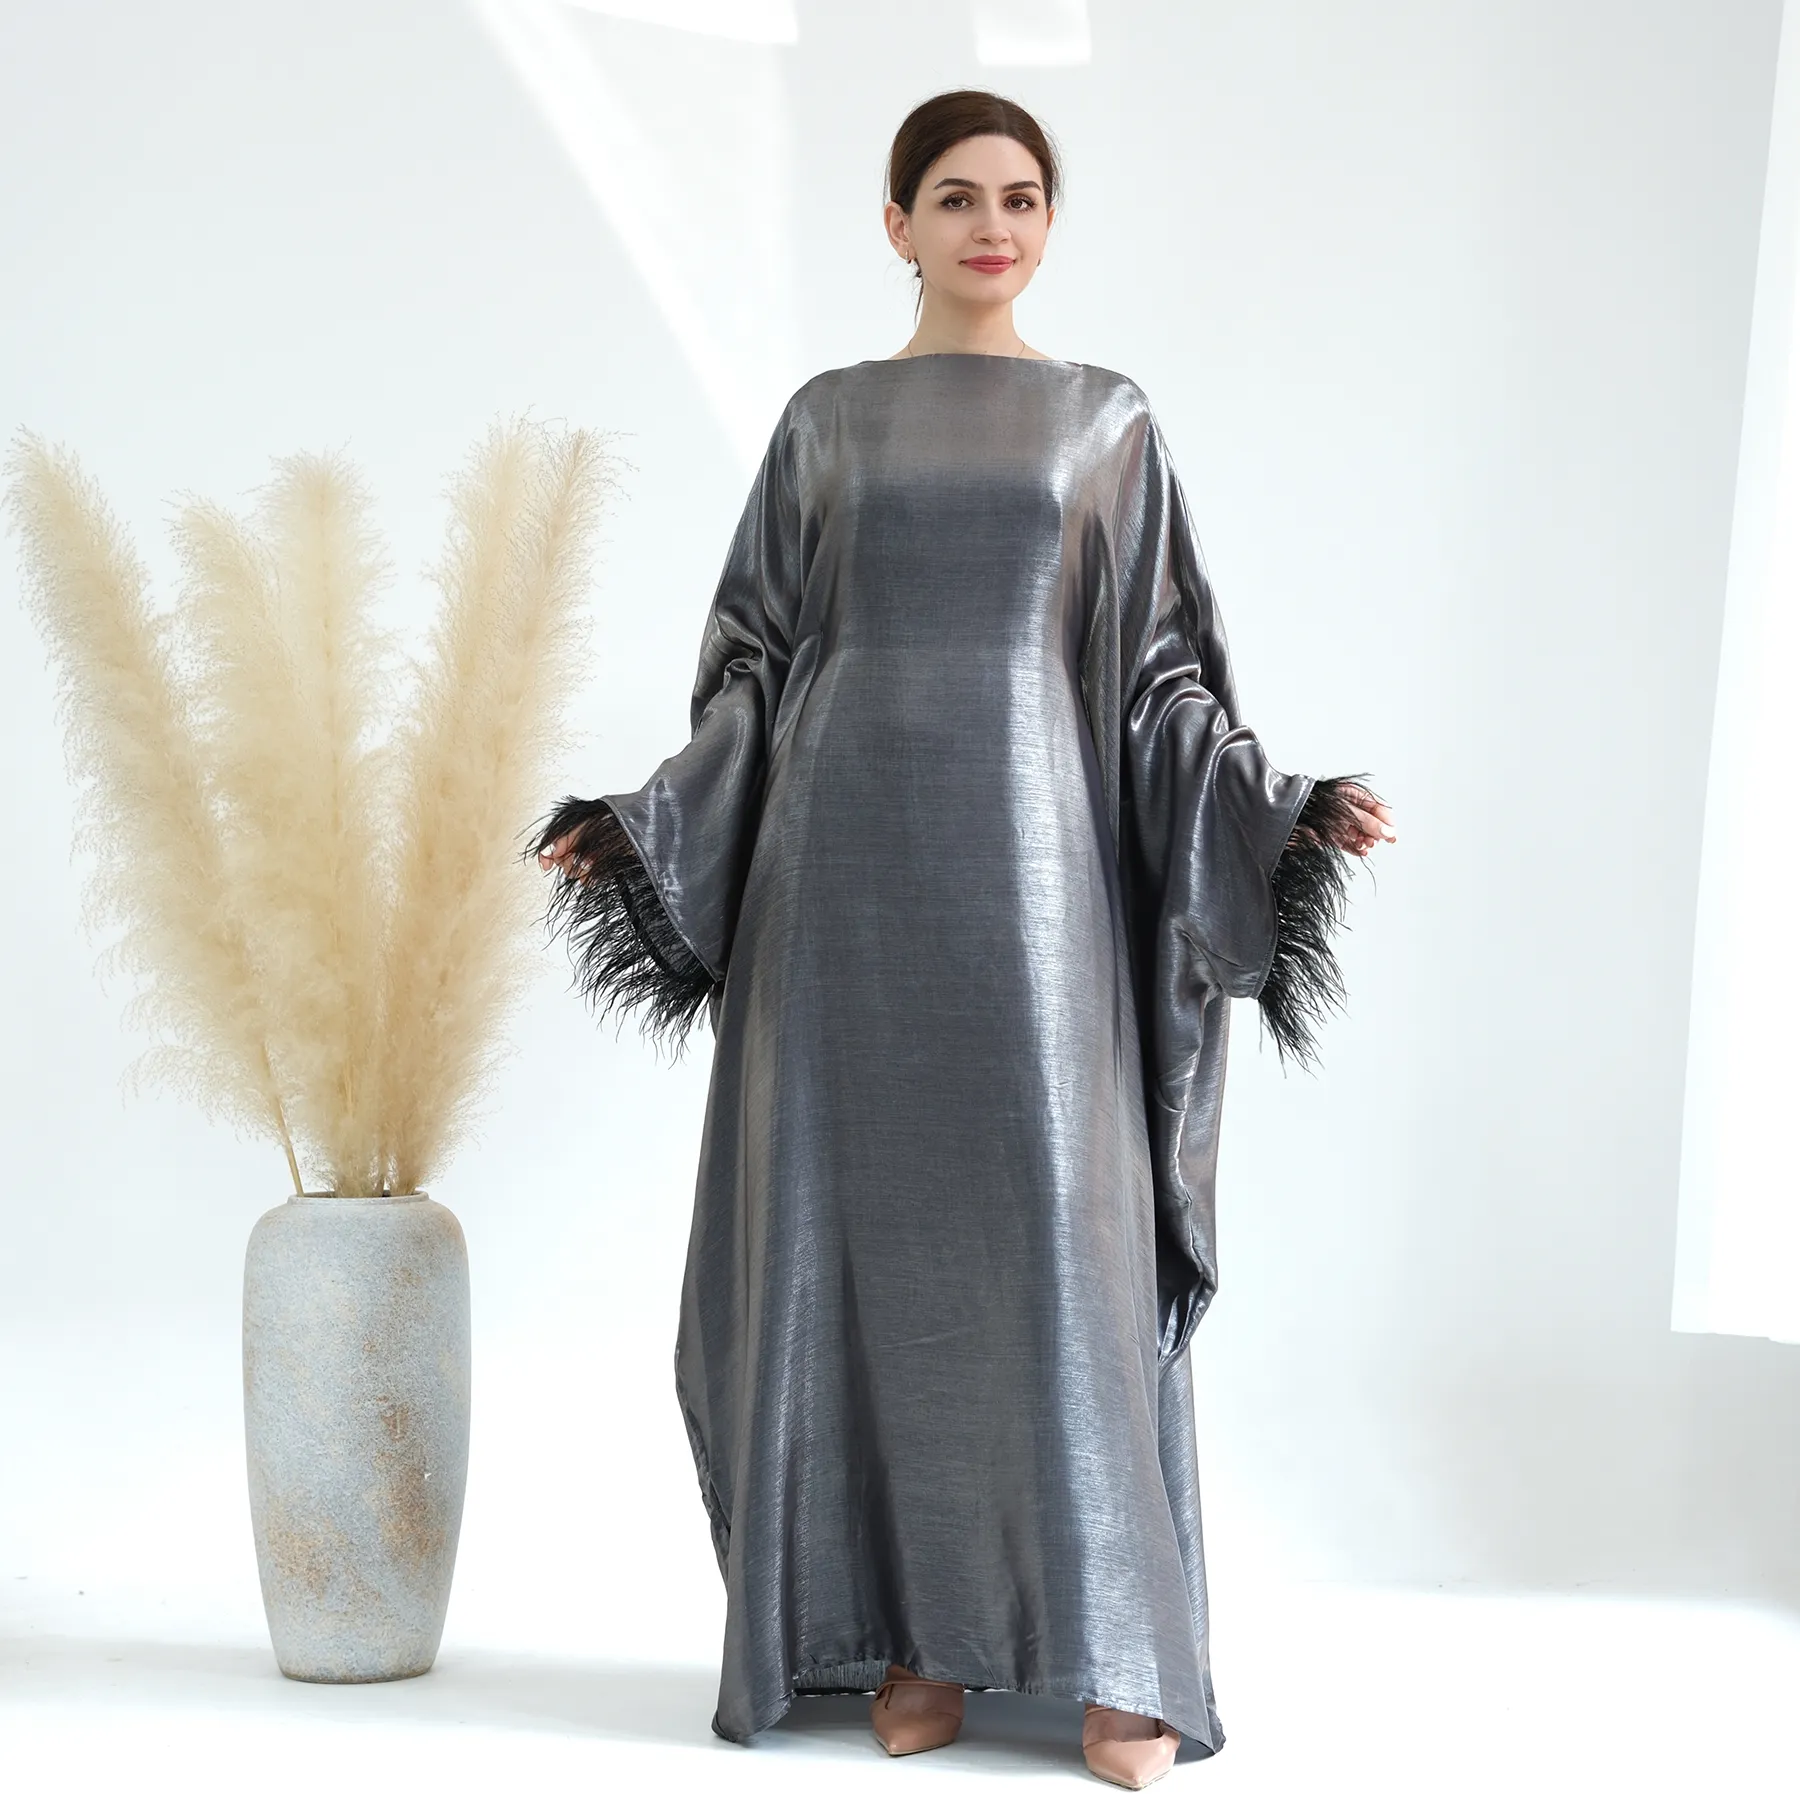 2023 Wholesale New Colorful Islamic Clothing Women Abaya Dubai Modest Dress With An Inside Belt Shining Casual Dresses